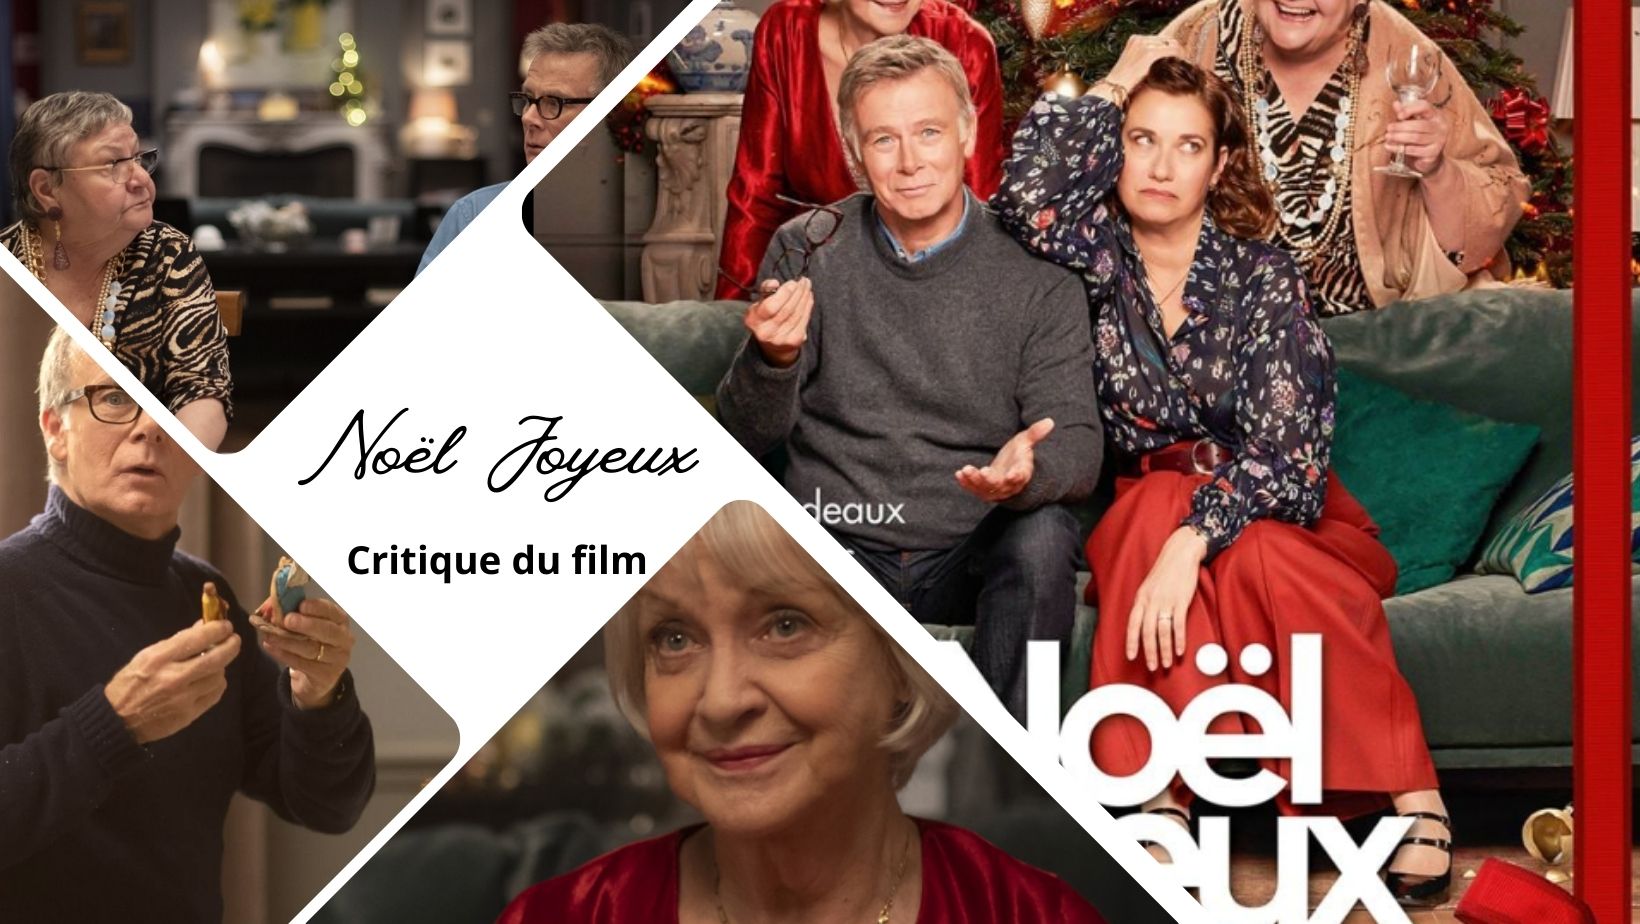 Noël Joyeux avec Franck Dubosc, Emmanuelle Devos - Critique du film